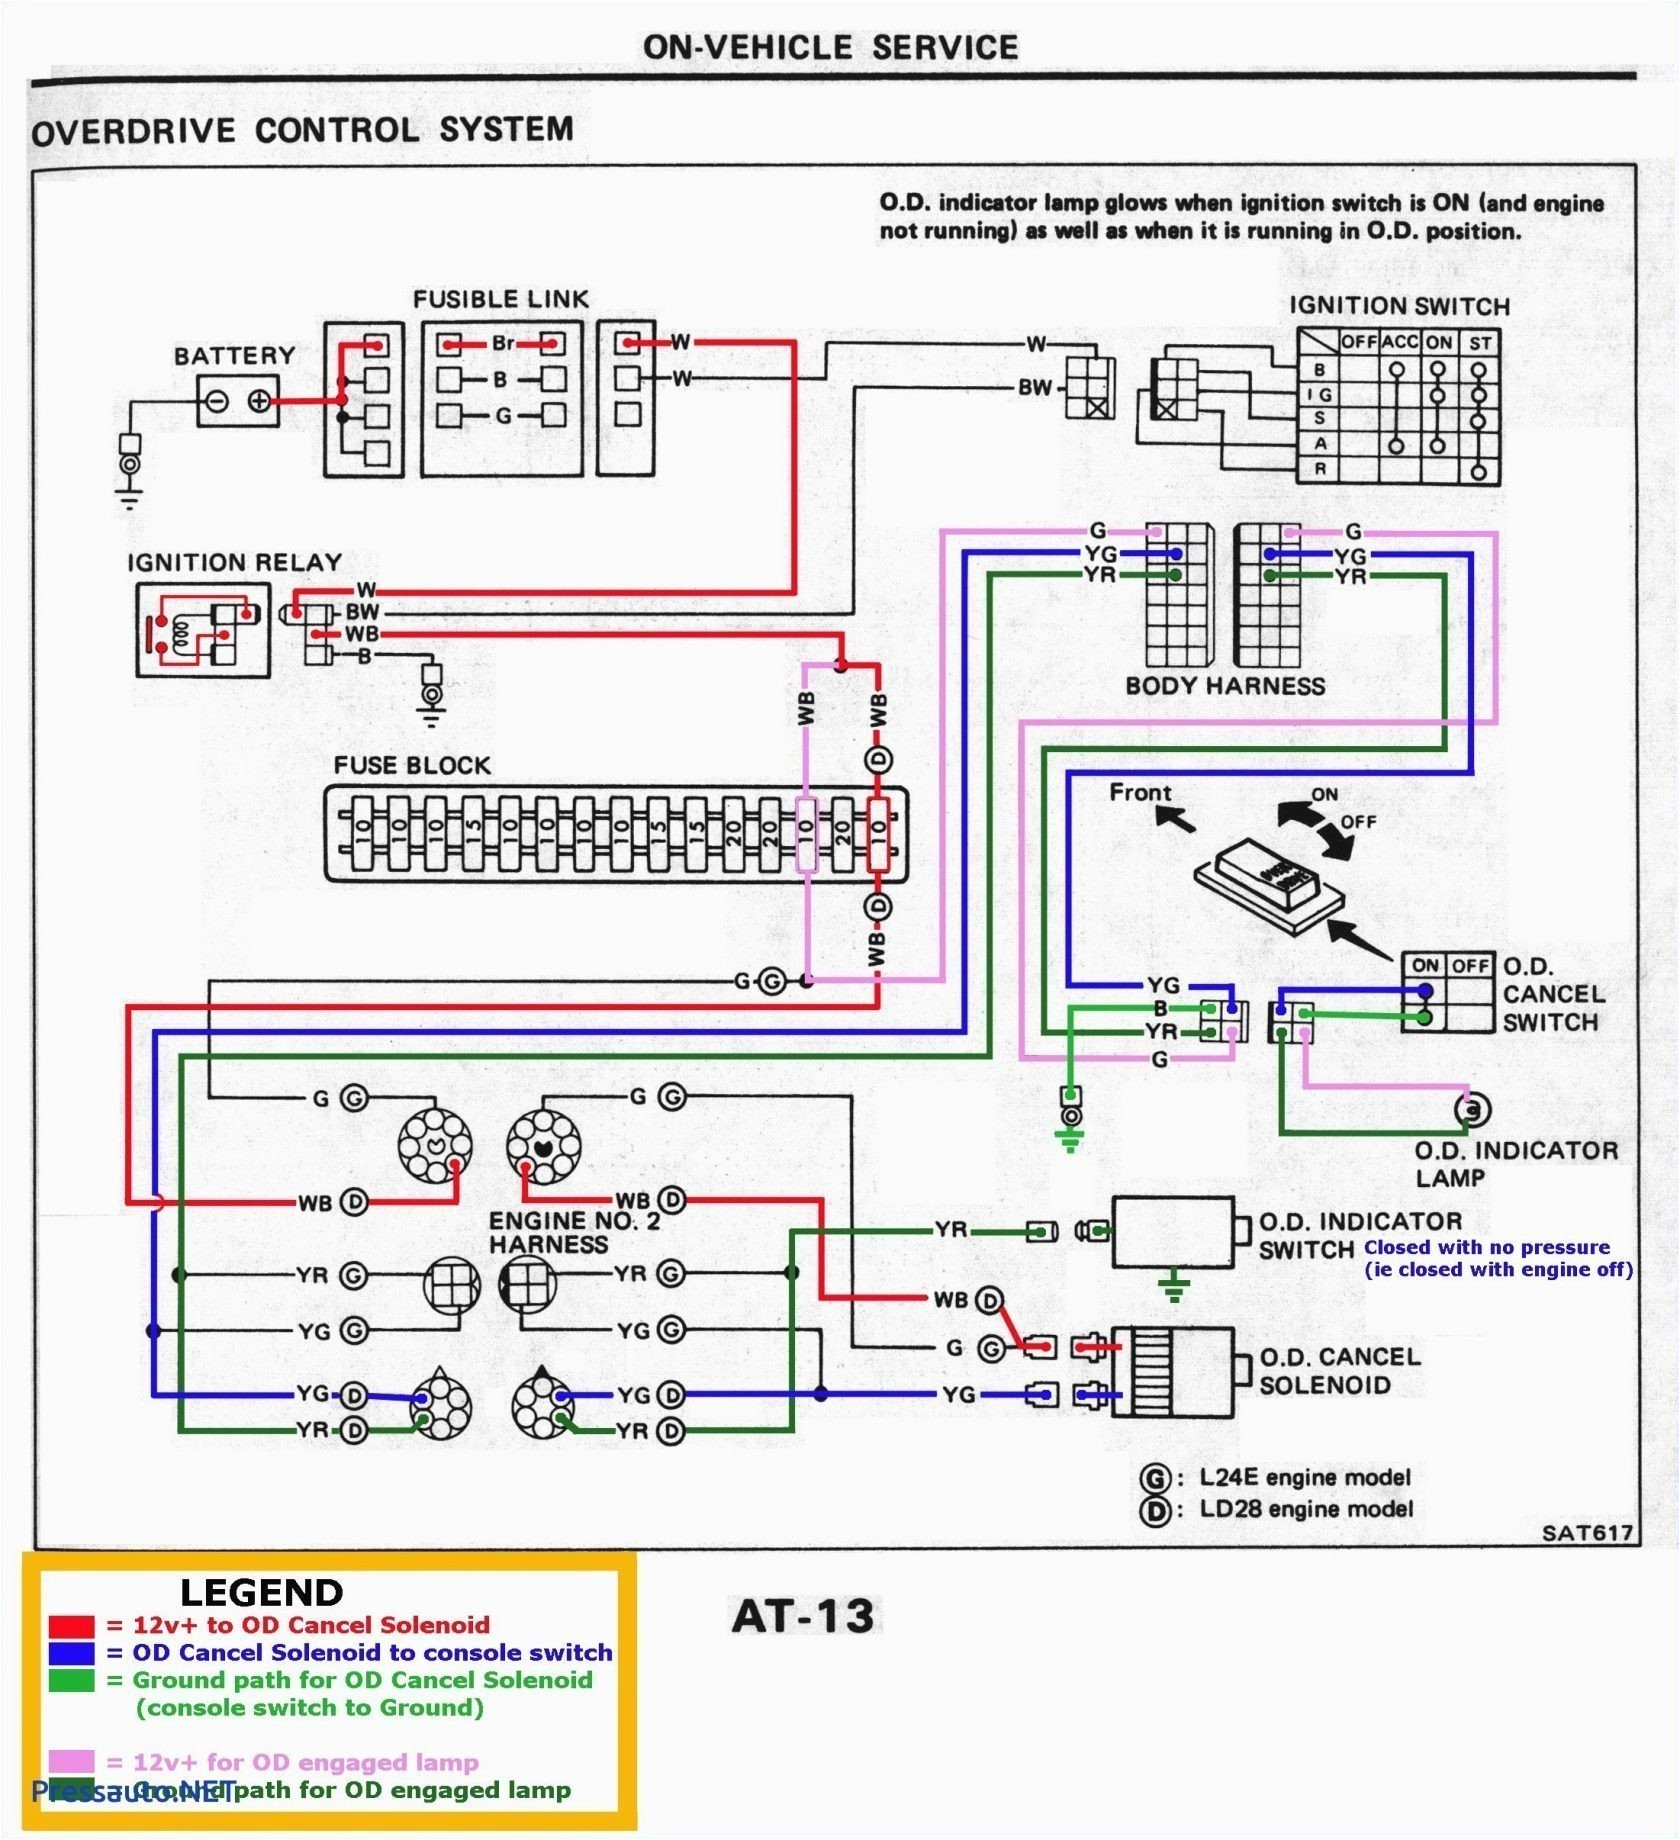 chevrolet c70 wiring diagram wiring diagrams longc70 wiring diagram wiring diagrams chevrolet c70 wiring diagram